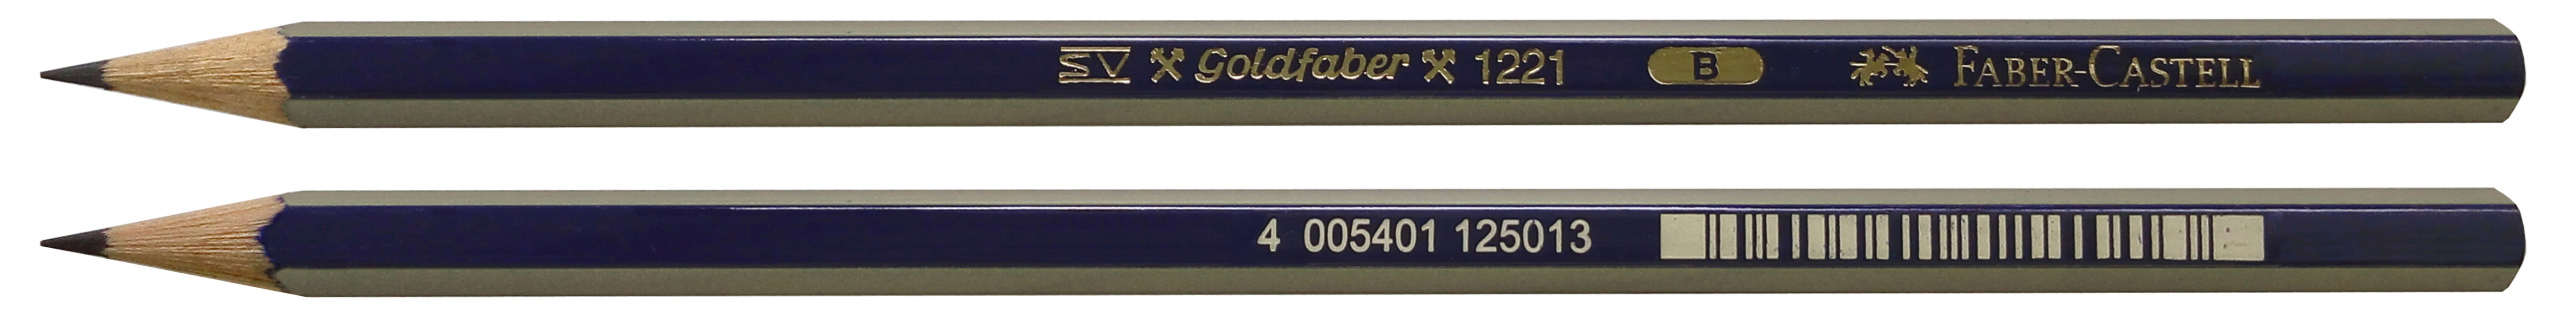 FABER-CASTELL Crayon B 112501 Goldfaber Goldfaber